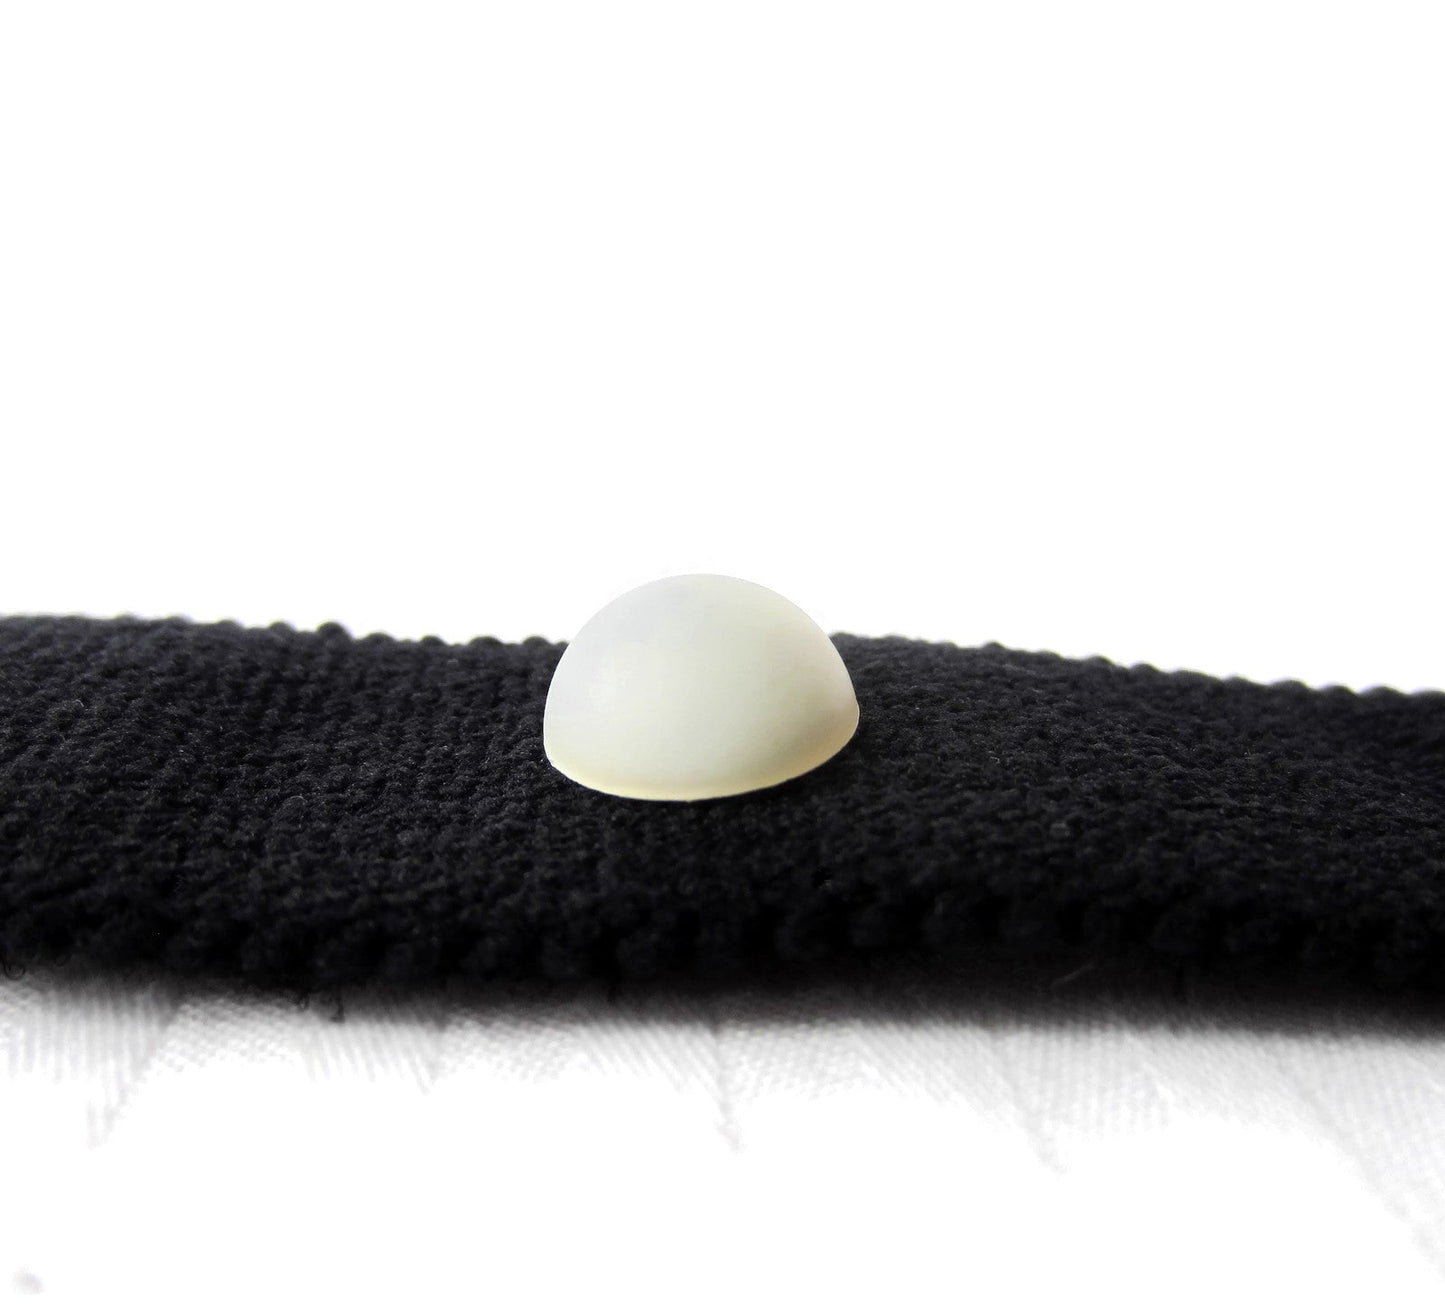 Designer Nausea Bracelets-Adjustable Motion Sickness Band, Calming Relief-Pair - Acupressure Bracelets